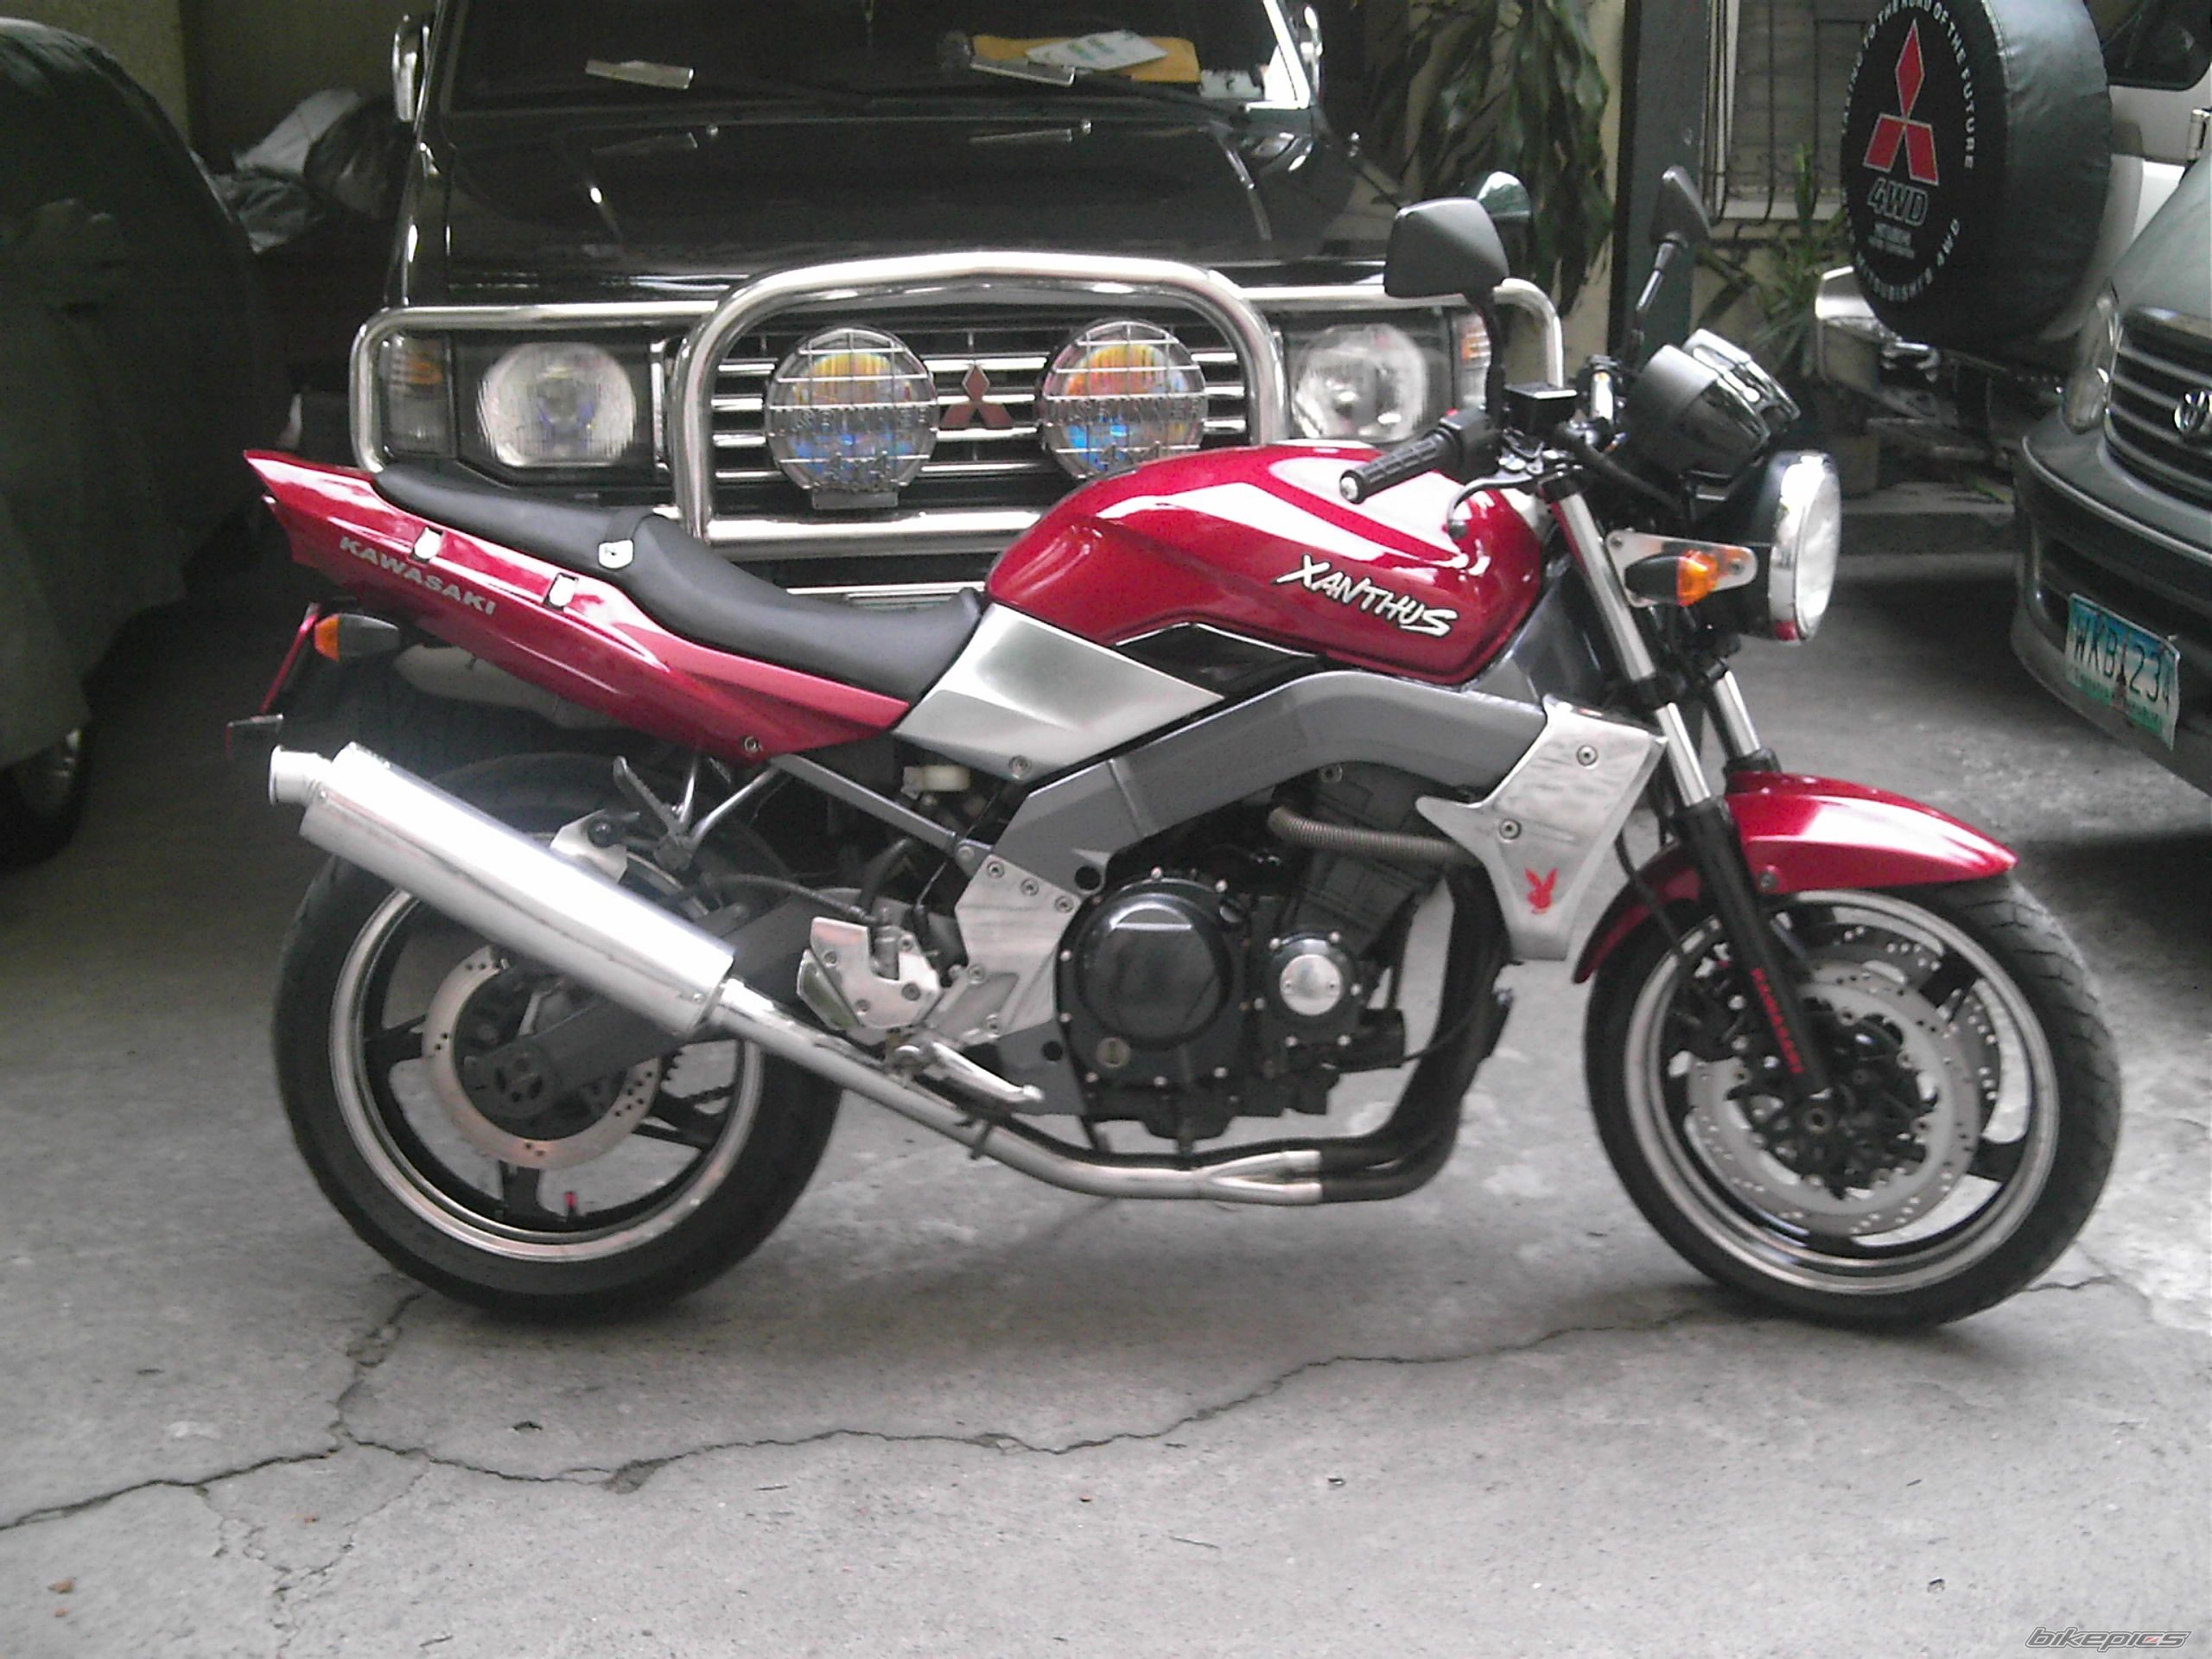 Мотоцикл кавасаки xanthus 400 - модель от знаменитого концерна | ⚡chtocar